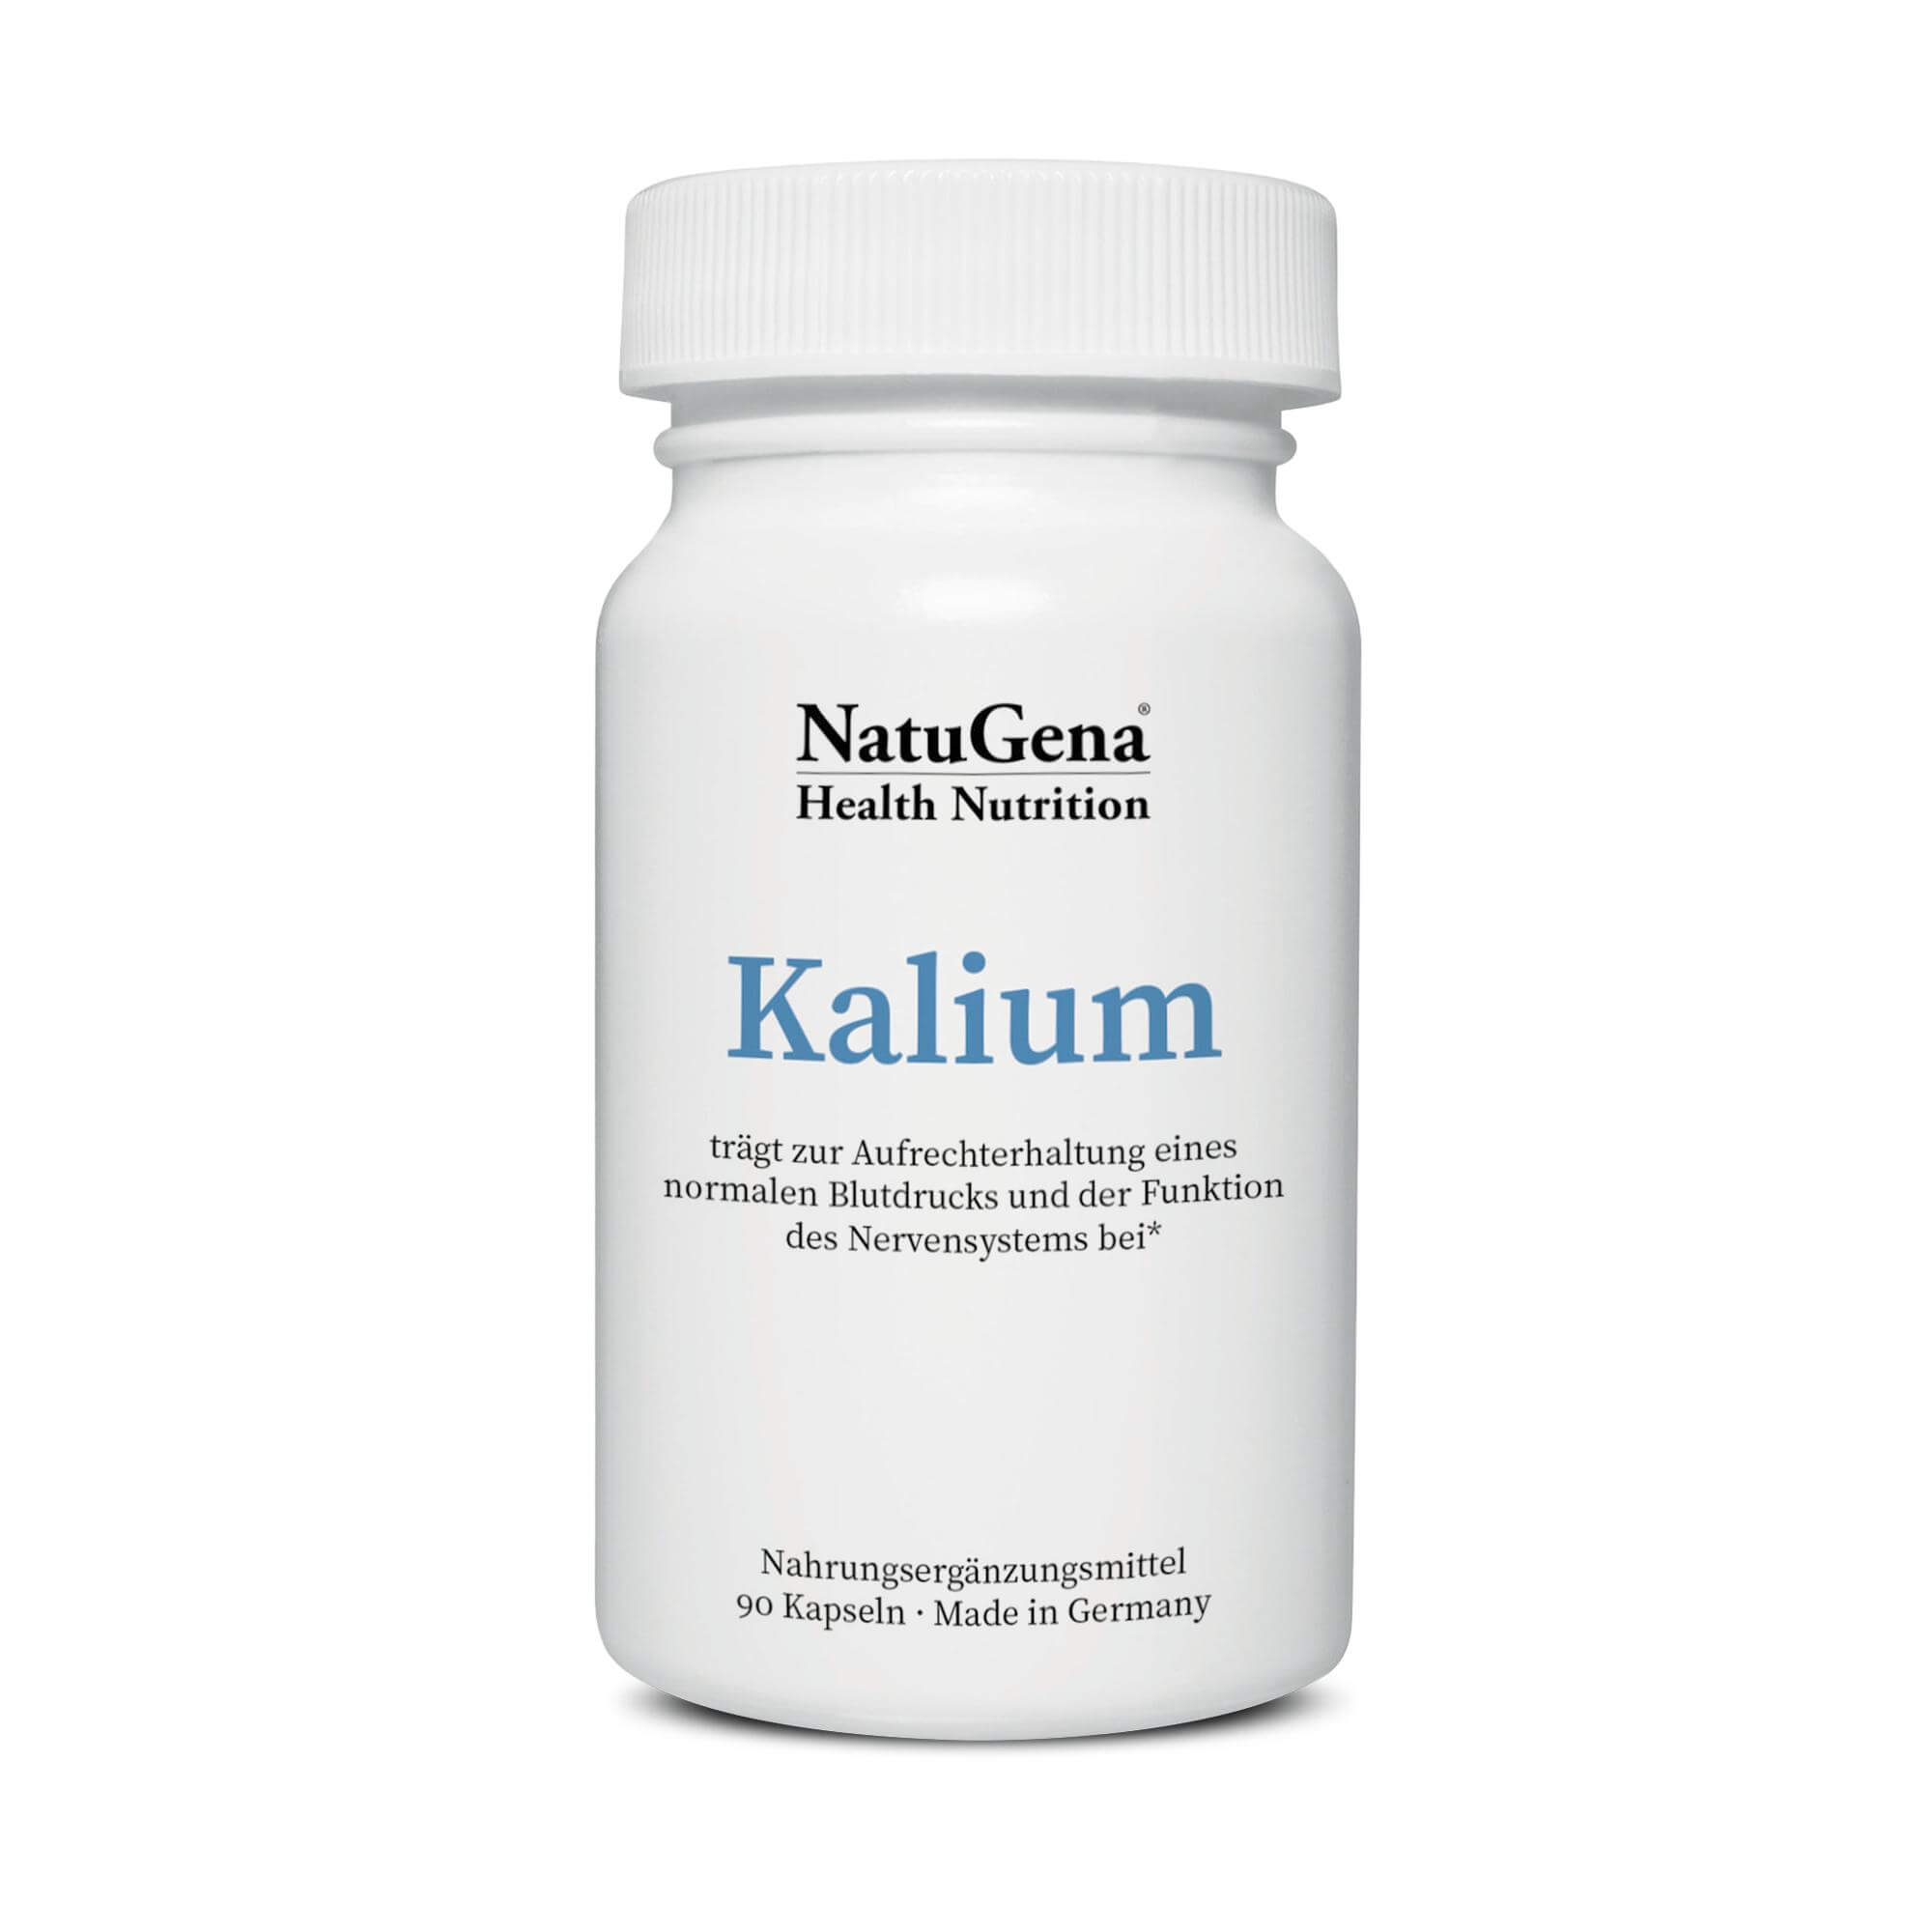 NatuGena Kalium | 90 Kapseln | Unterstützt Nervensystem und Muskelgesundheit